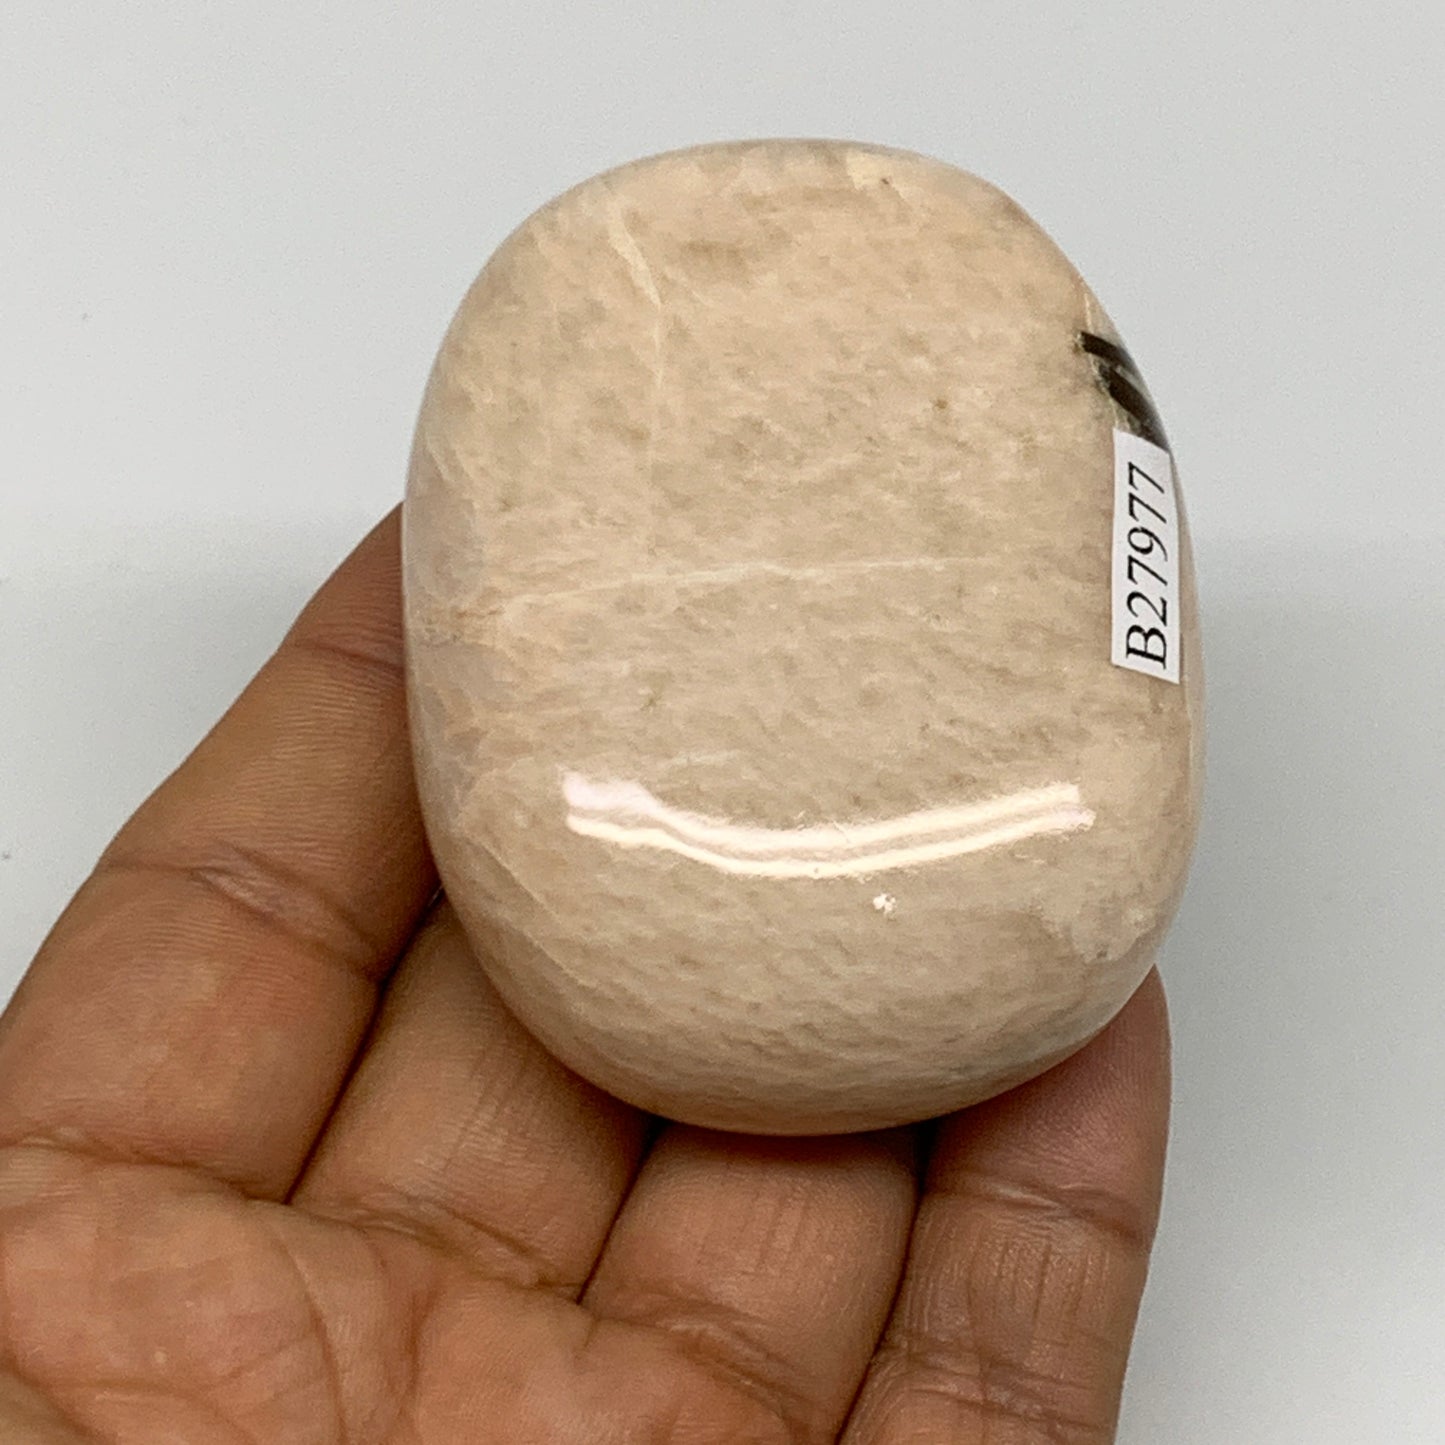 136.4g,2.5"x1.9"x1" Peach Moonstone Crystal Palm-Stone Polished Reiki, B27977